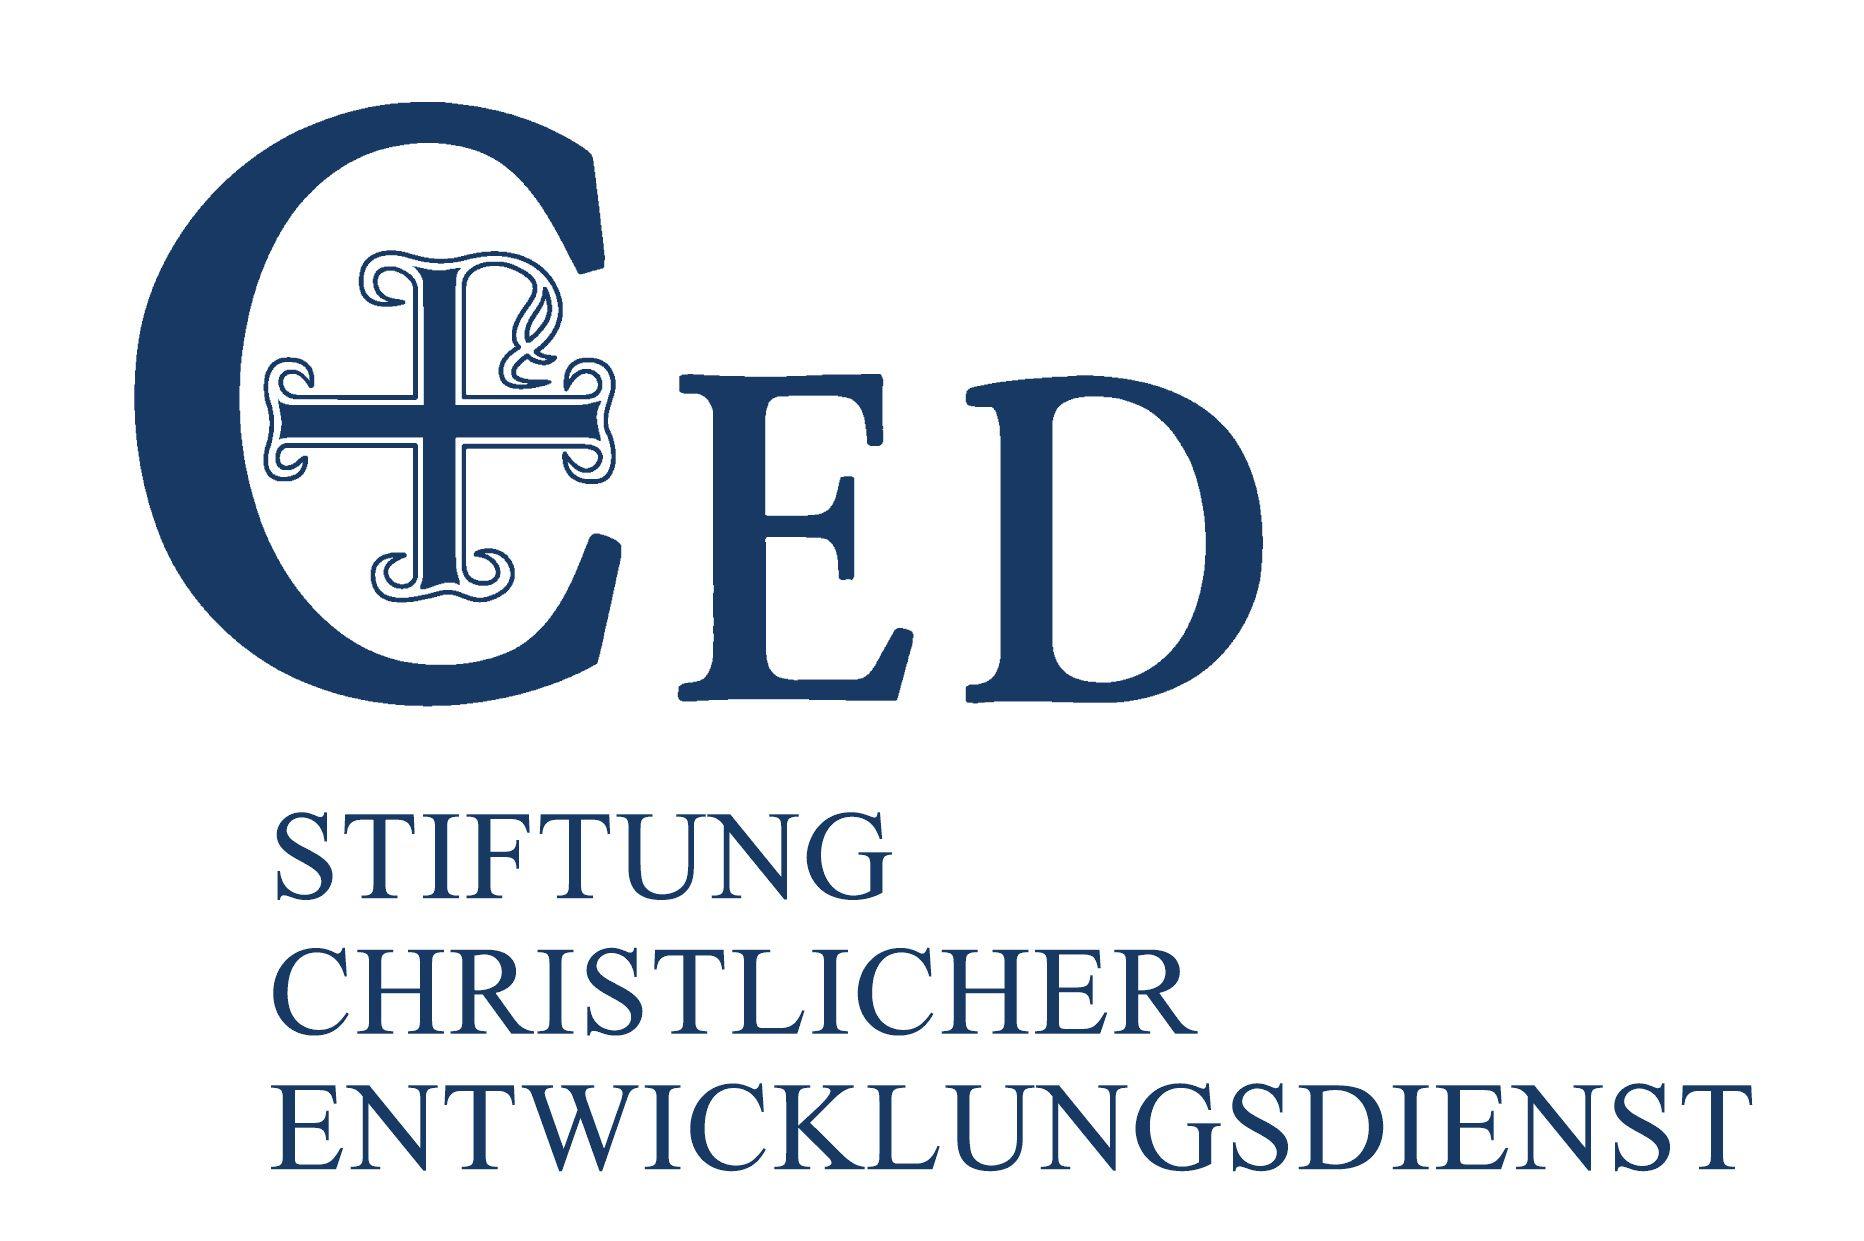 CED Logo - File:CED-Logo.jpg - Wikimedia Commons